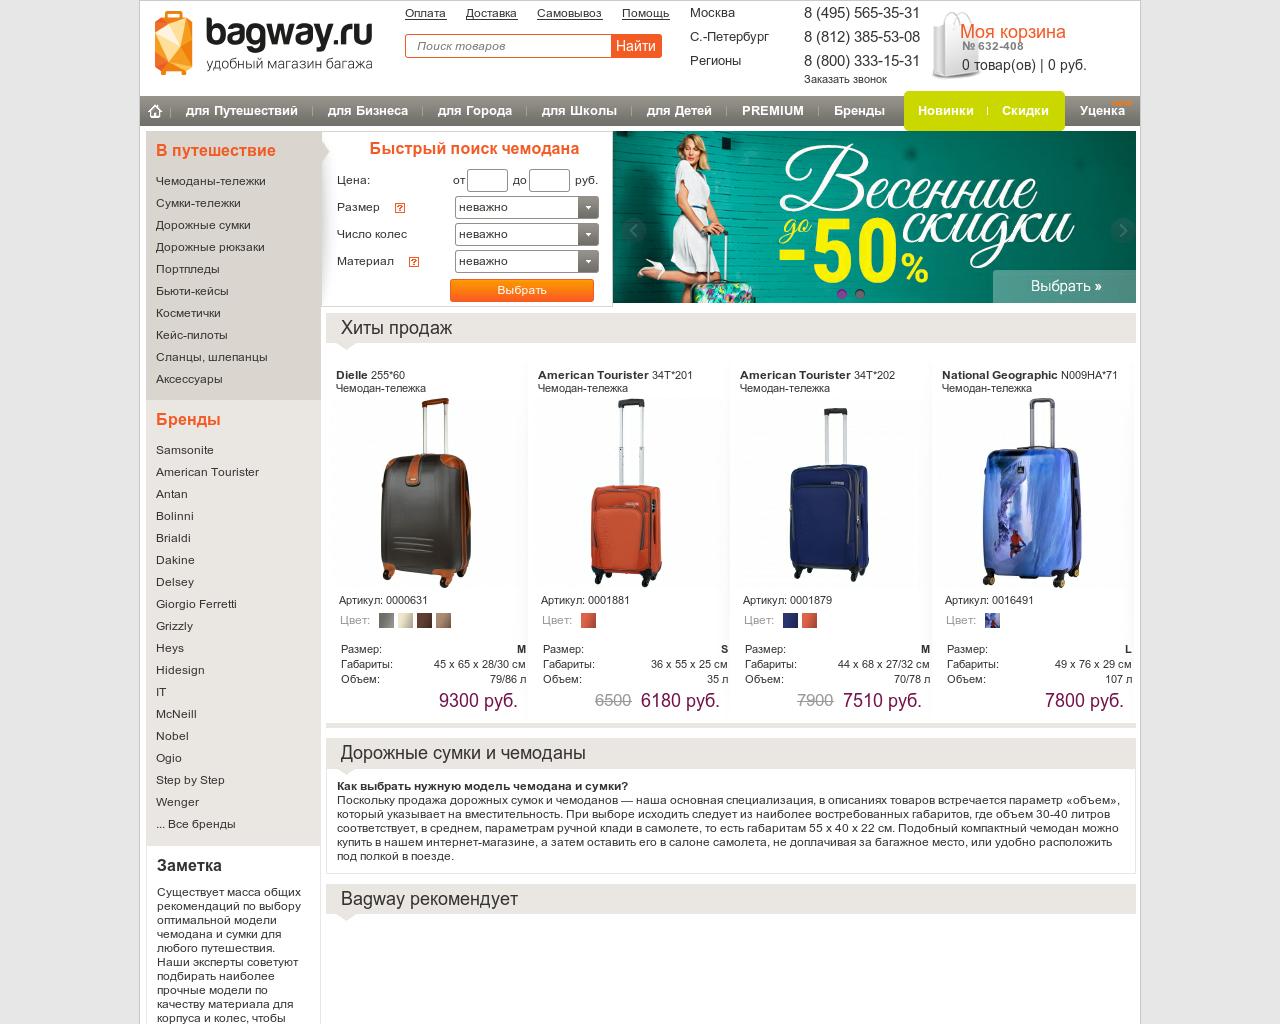 Изображение сайта bagway.ru в разрешении 1280x1024